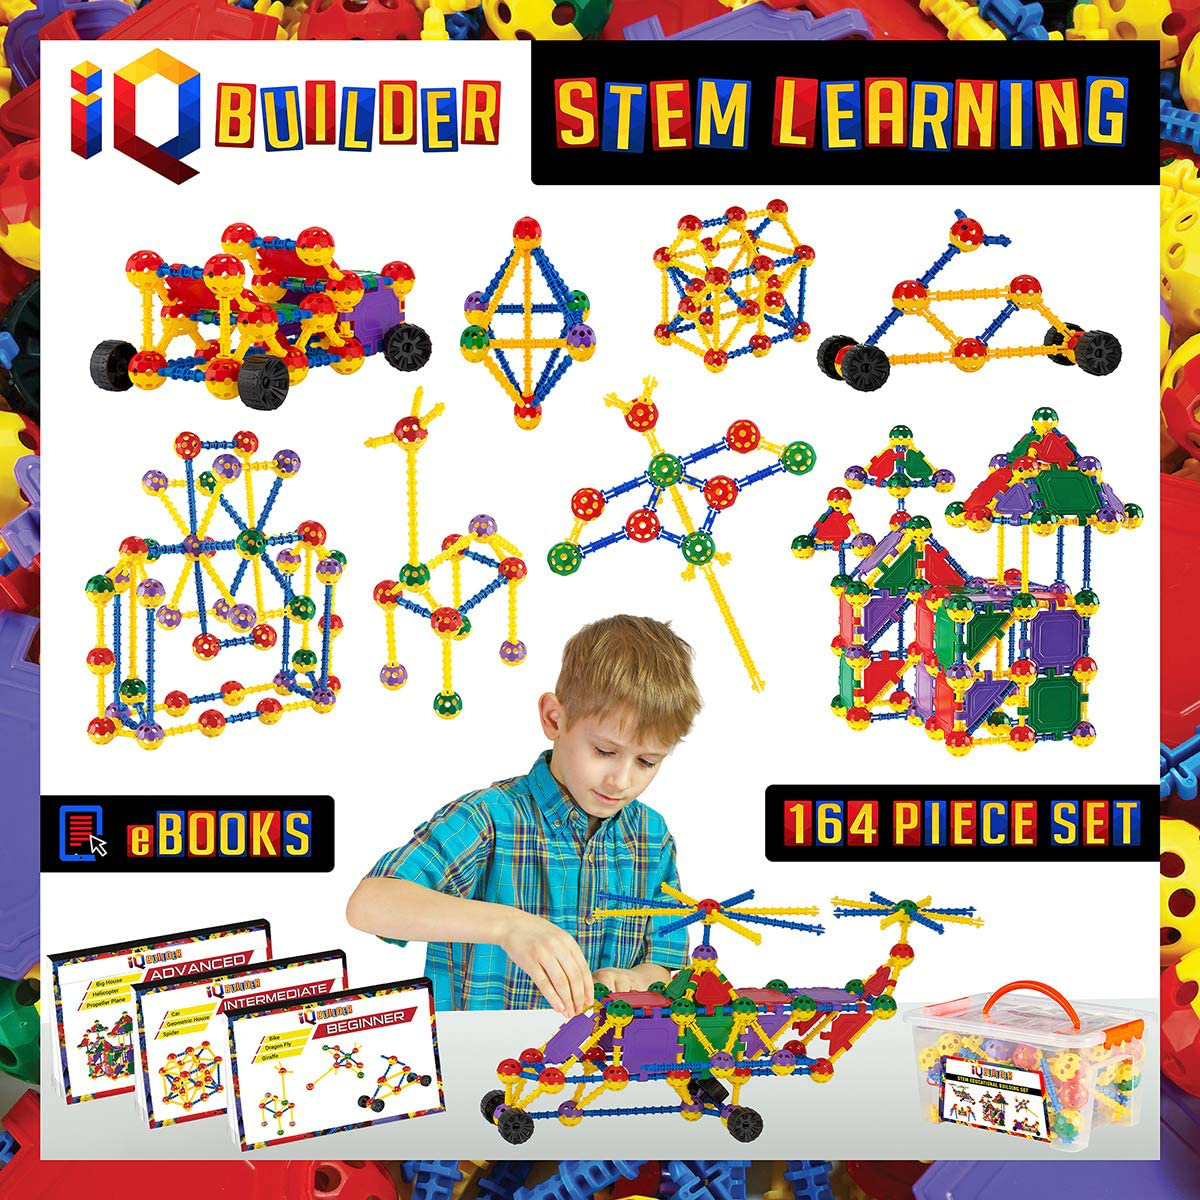 IQ BUILDERSTEM Learning ToysCreative Construction EngineeringFun Toy 3 